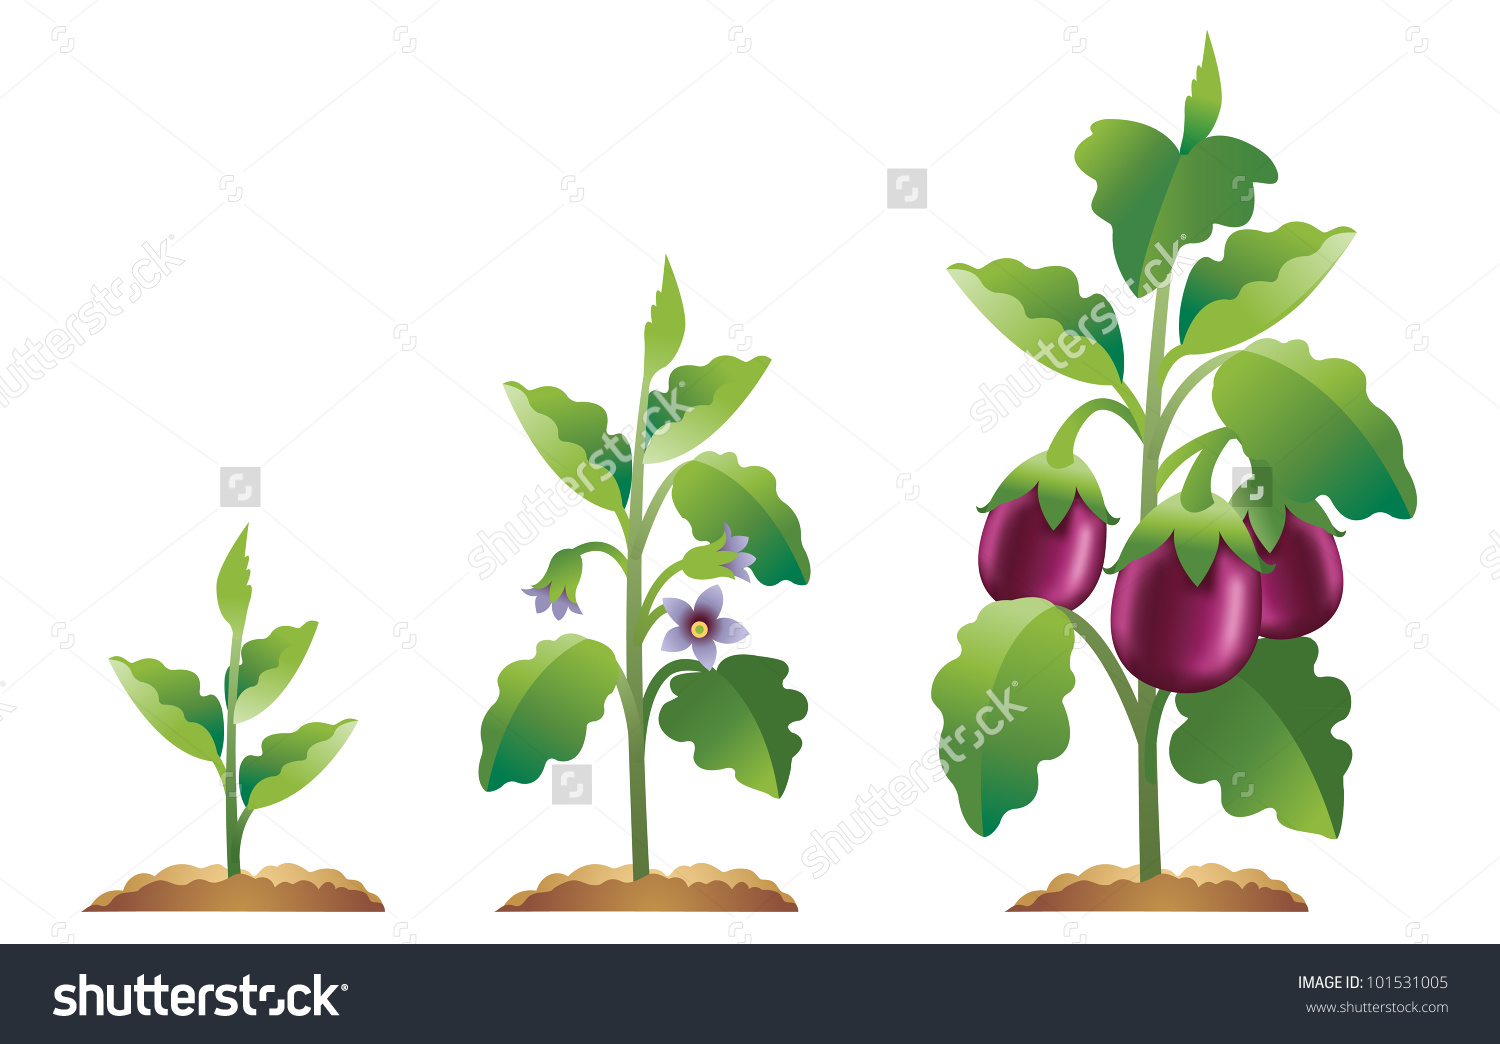 Eggplant plant clipart